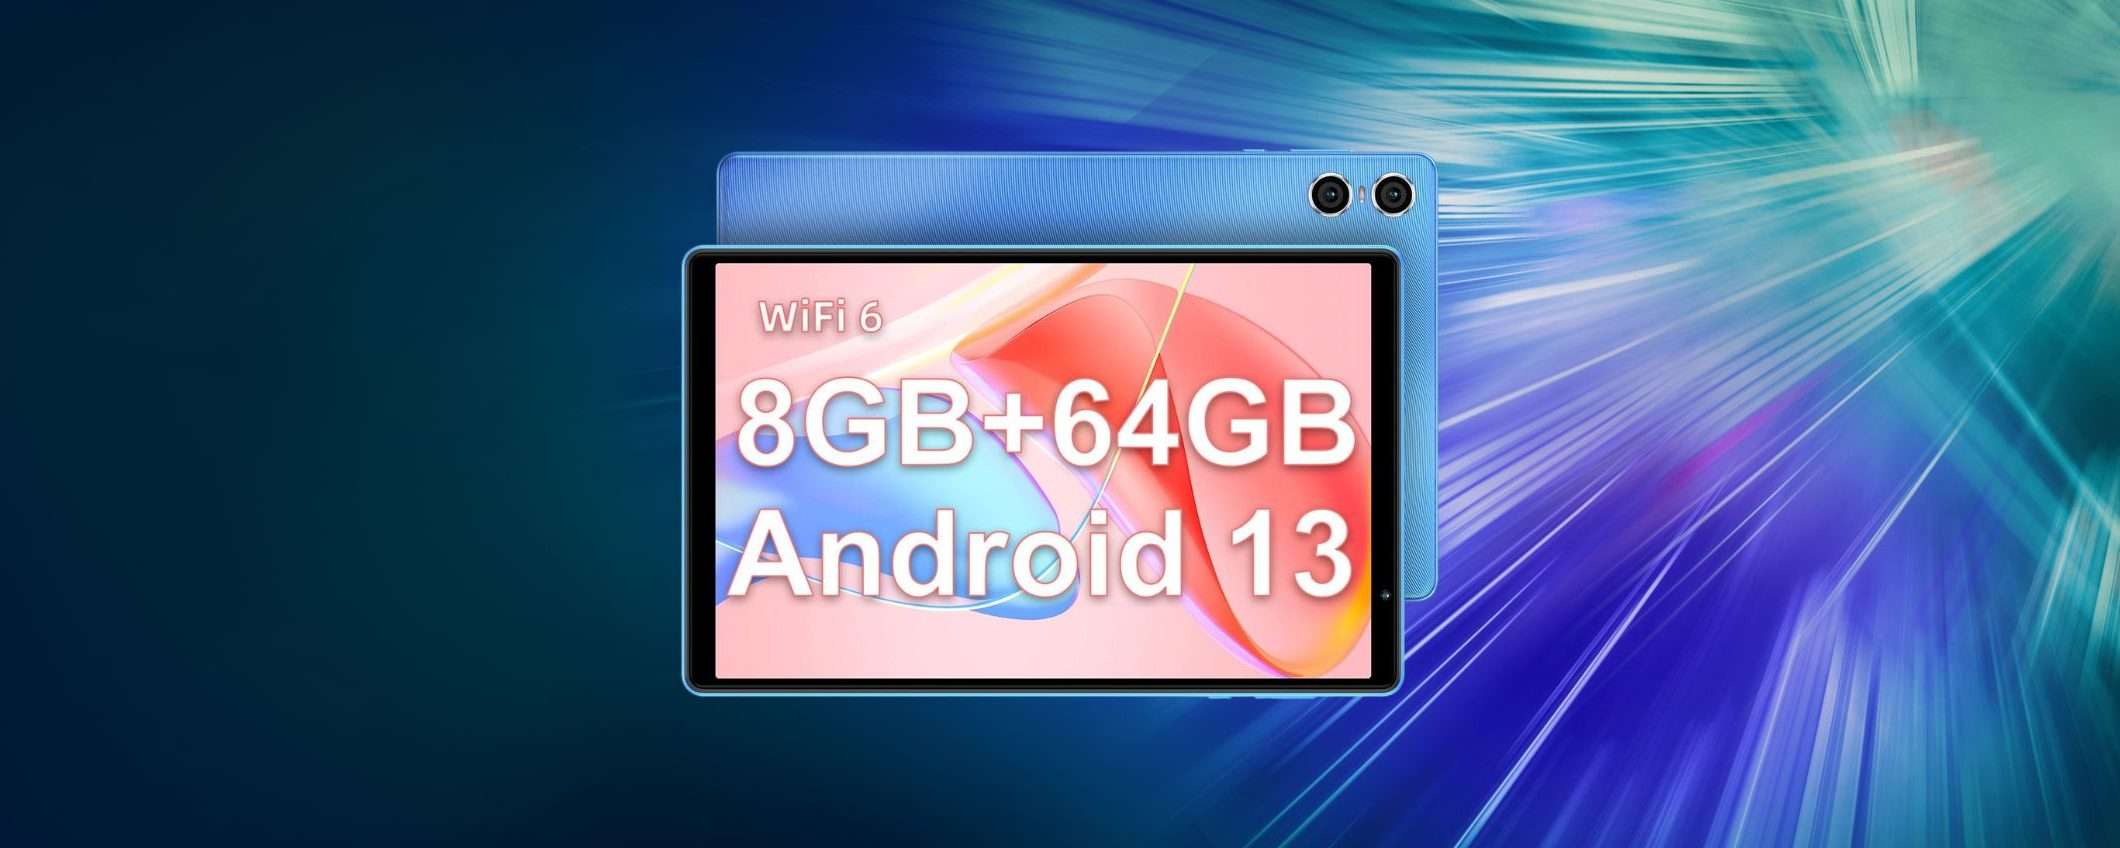 Tablet Android 10 pollici in super offerta: solo 89 euro su